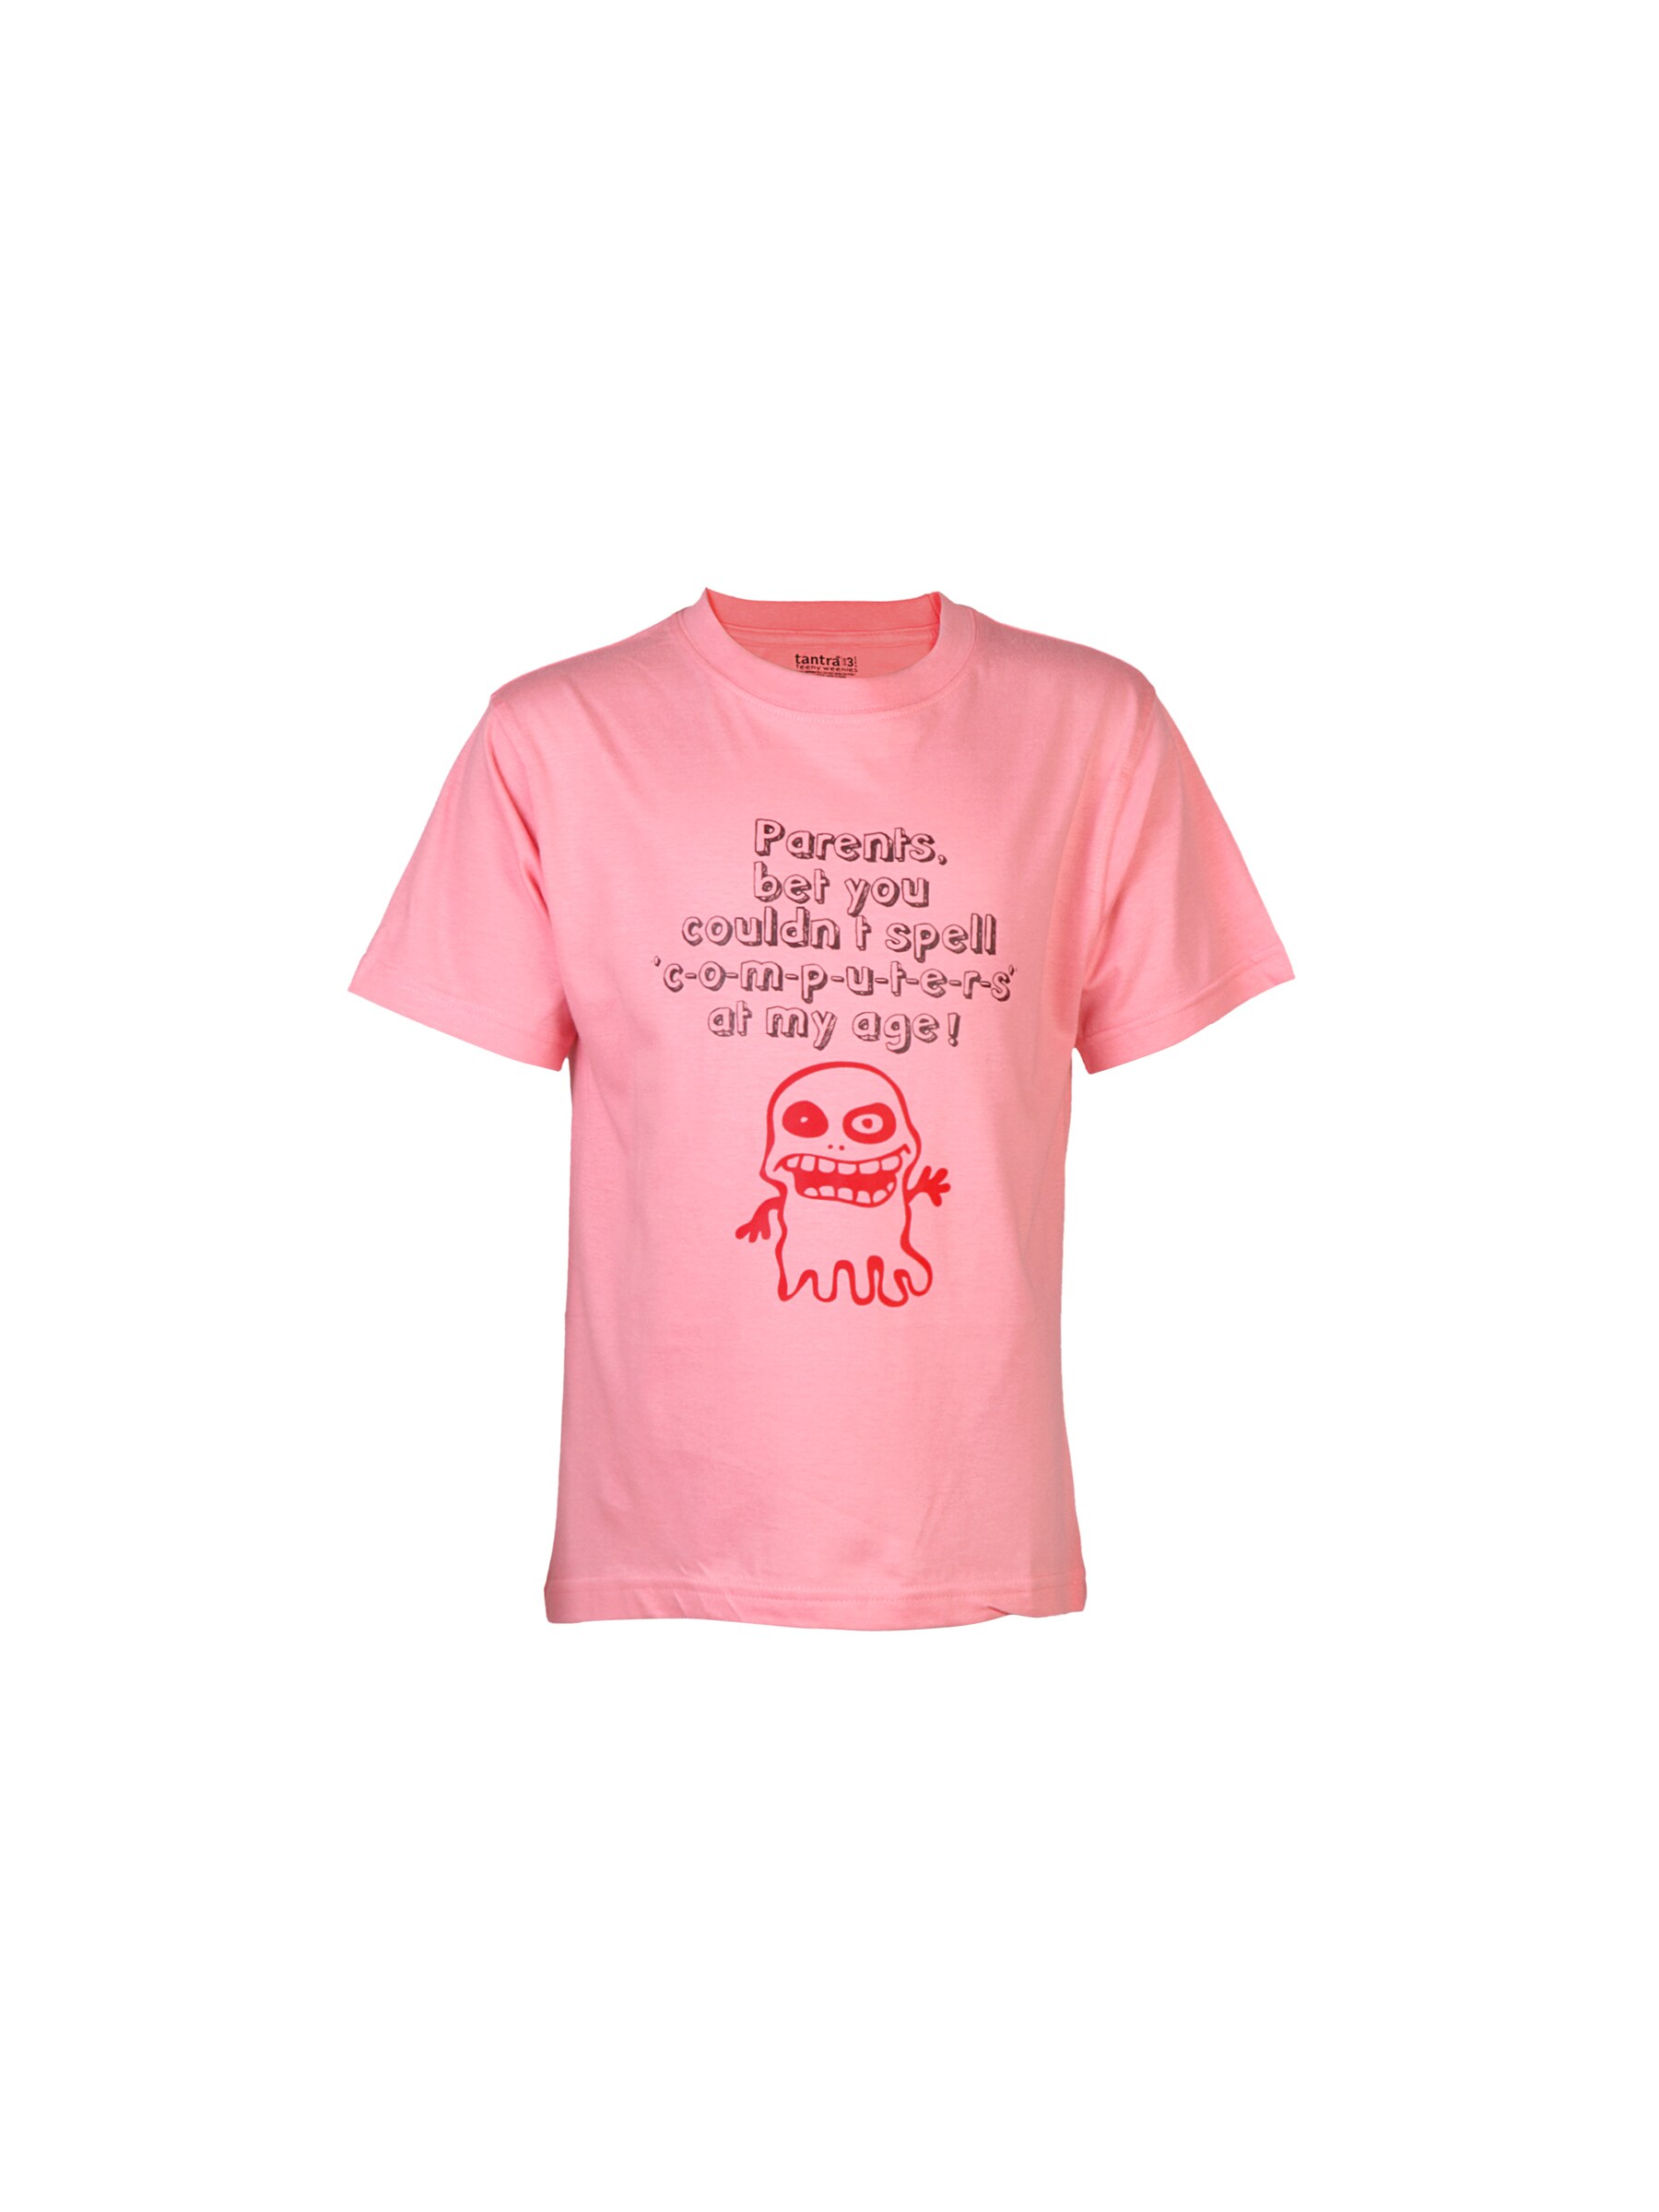 Tantra Unisex Printed Pink Tshirts